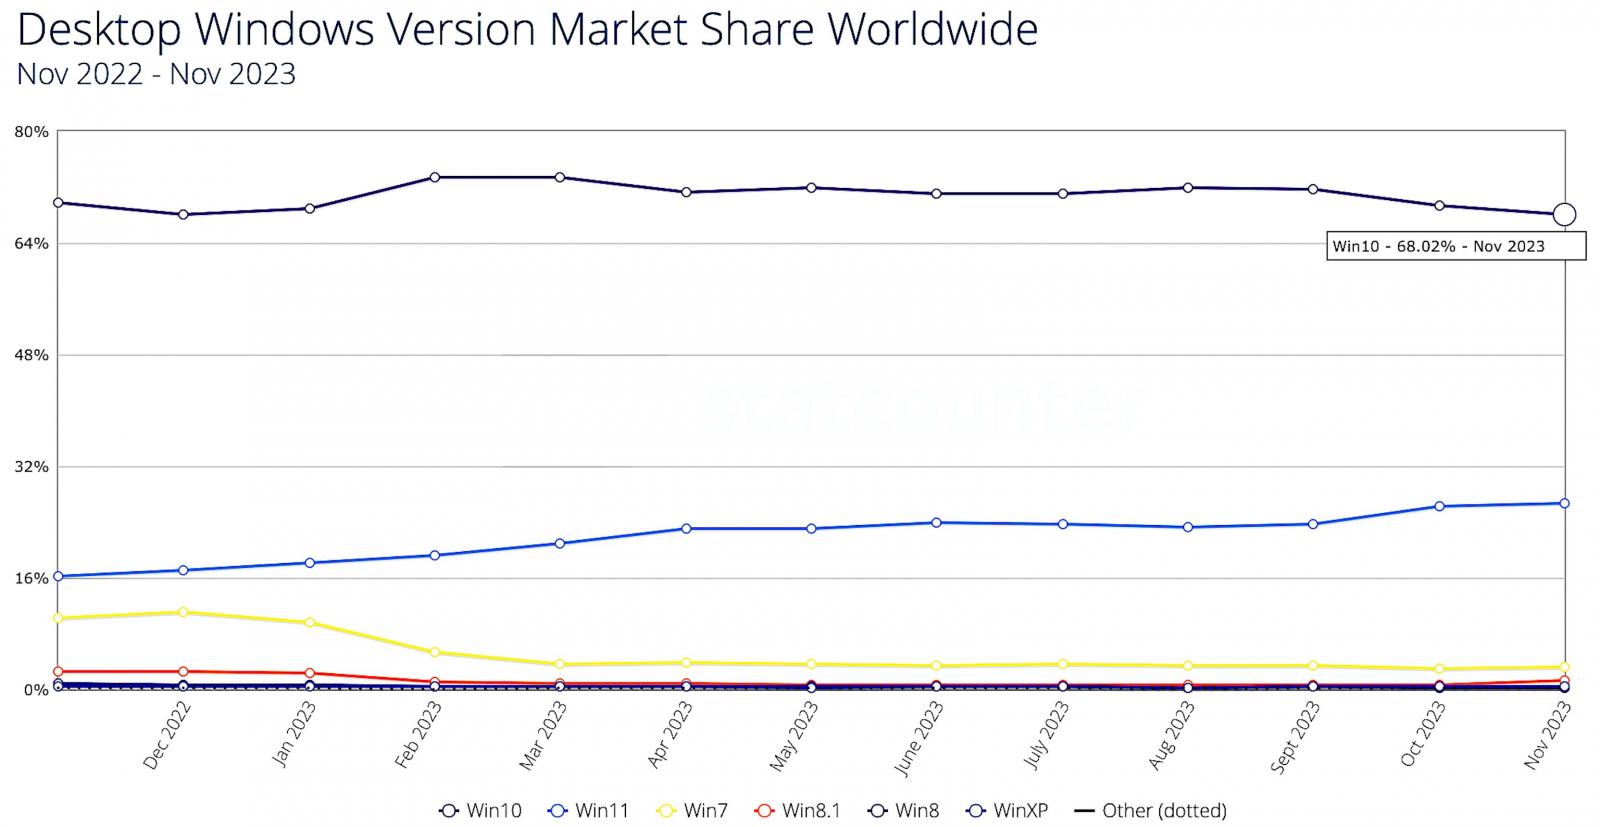 Windows 10 market share